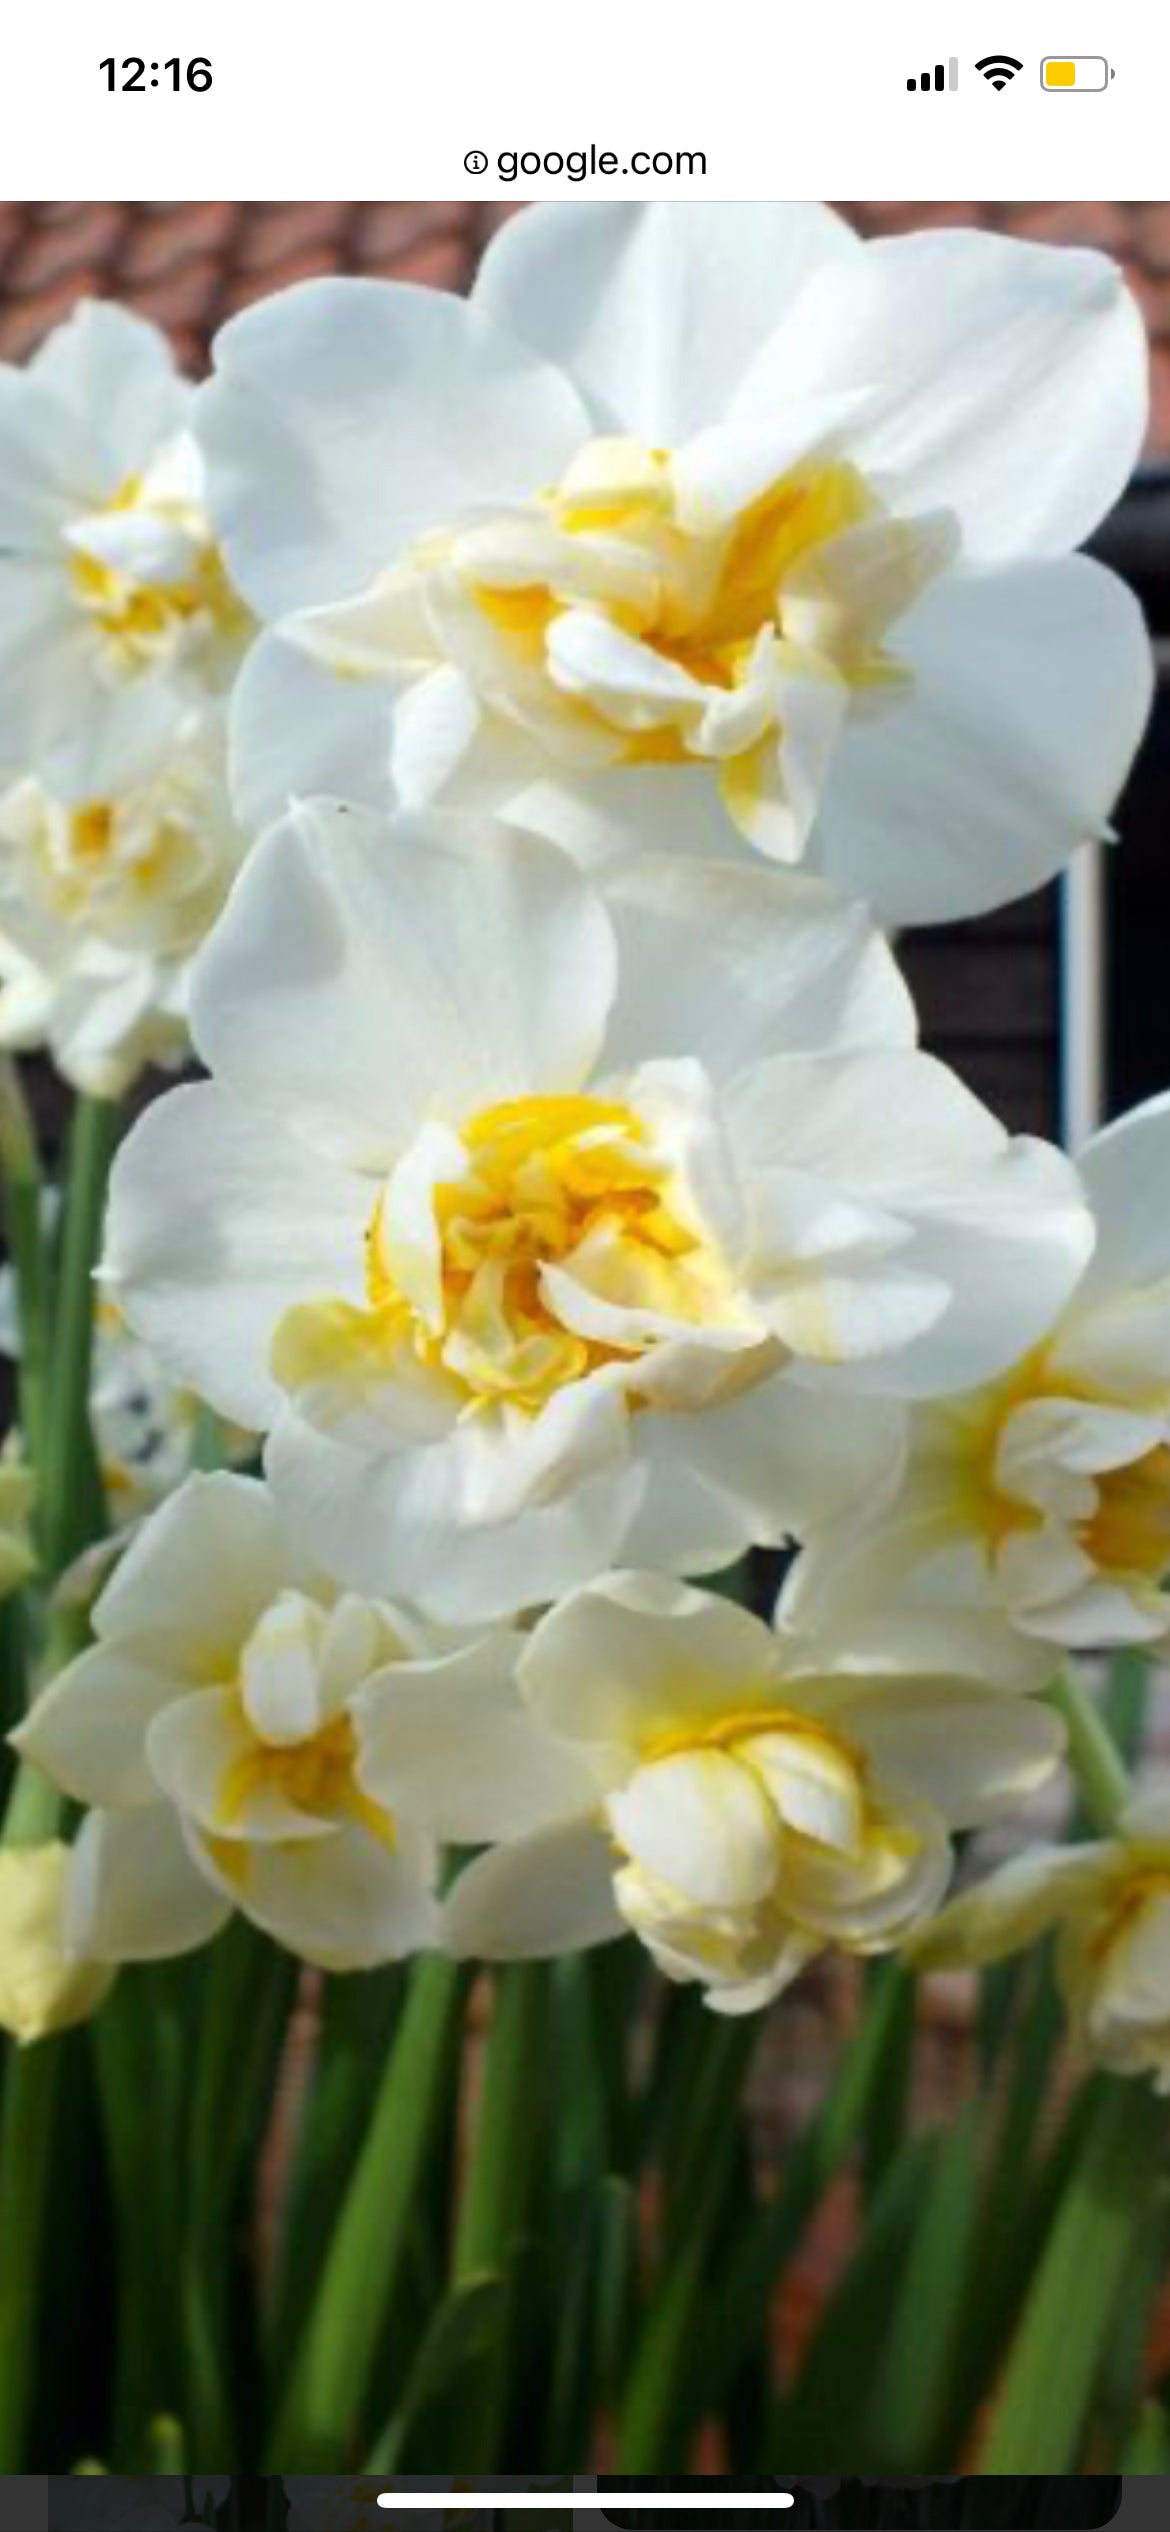 Daffodil Narcissus Bulb - variety Cheerfulness